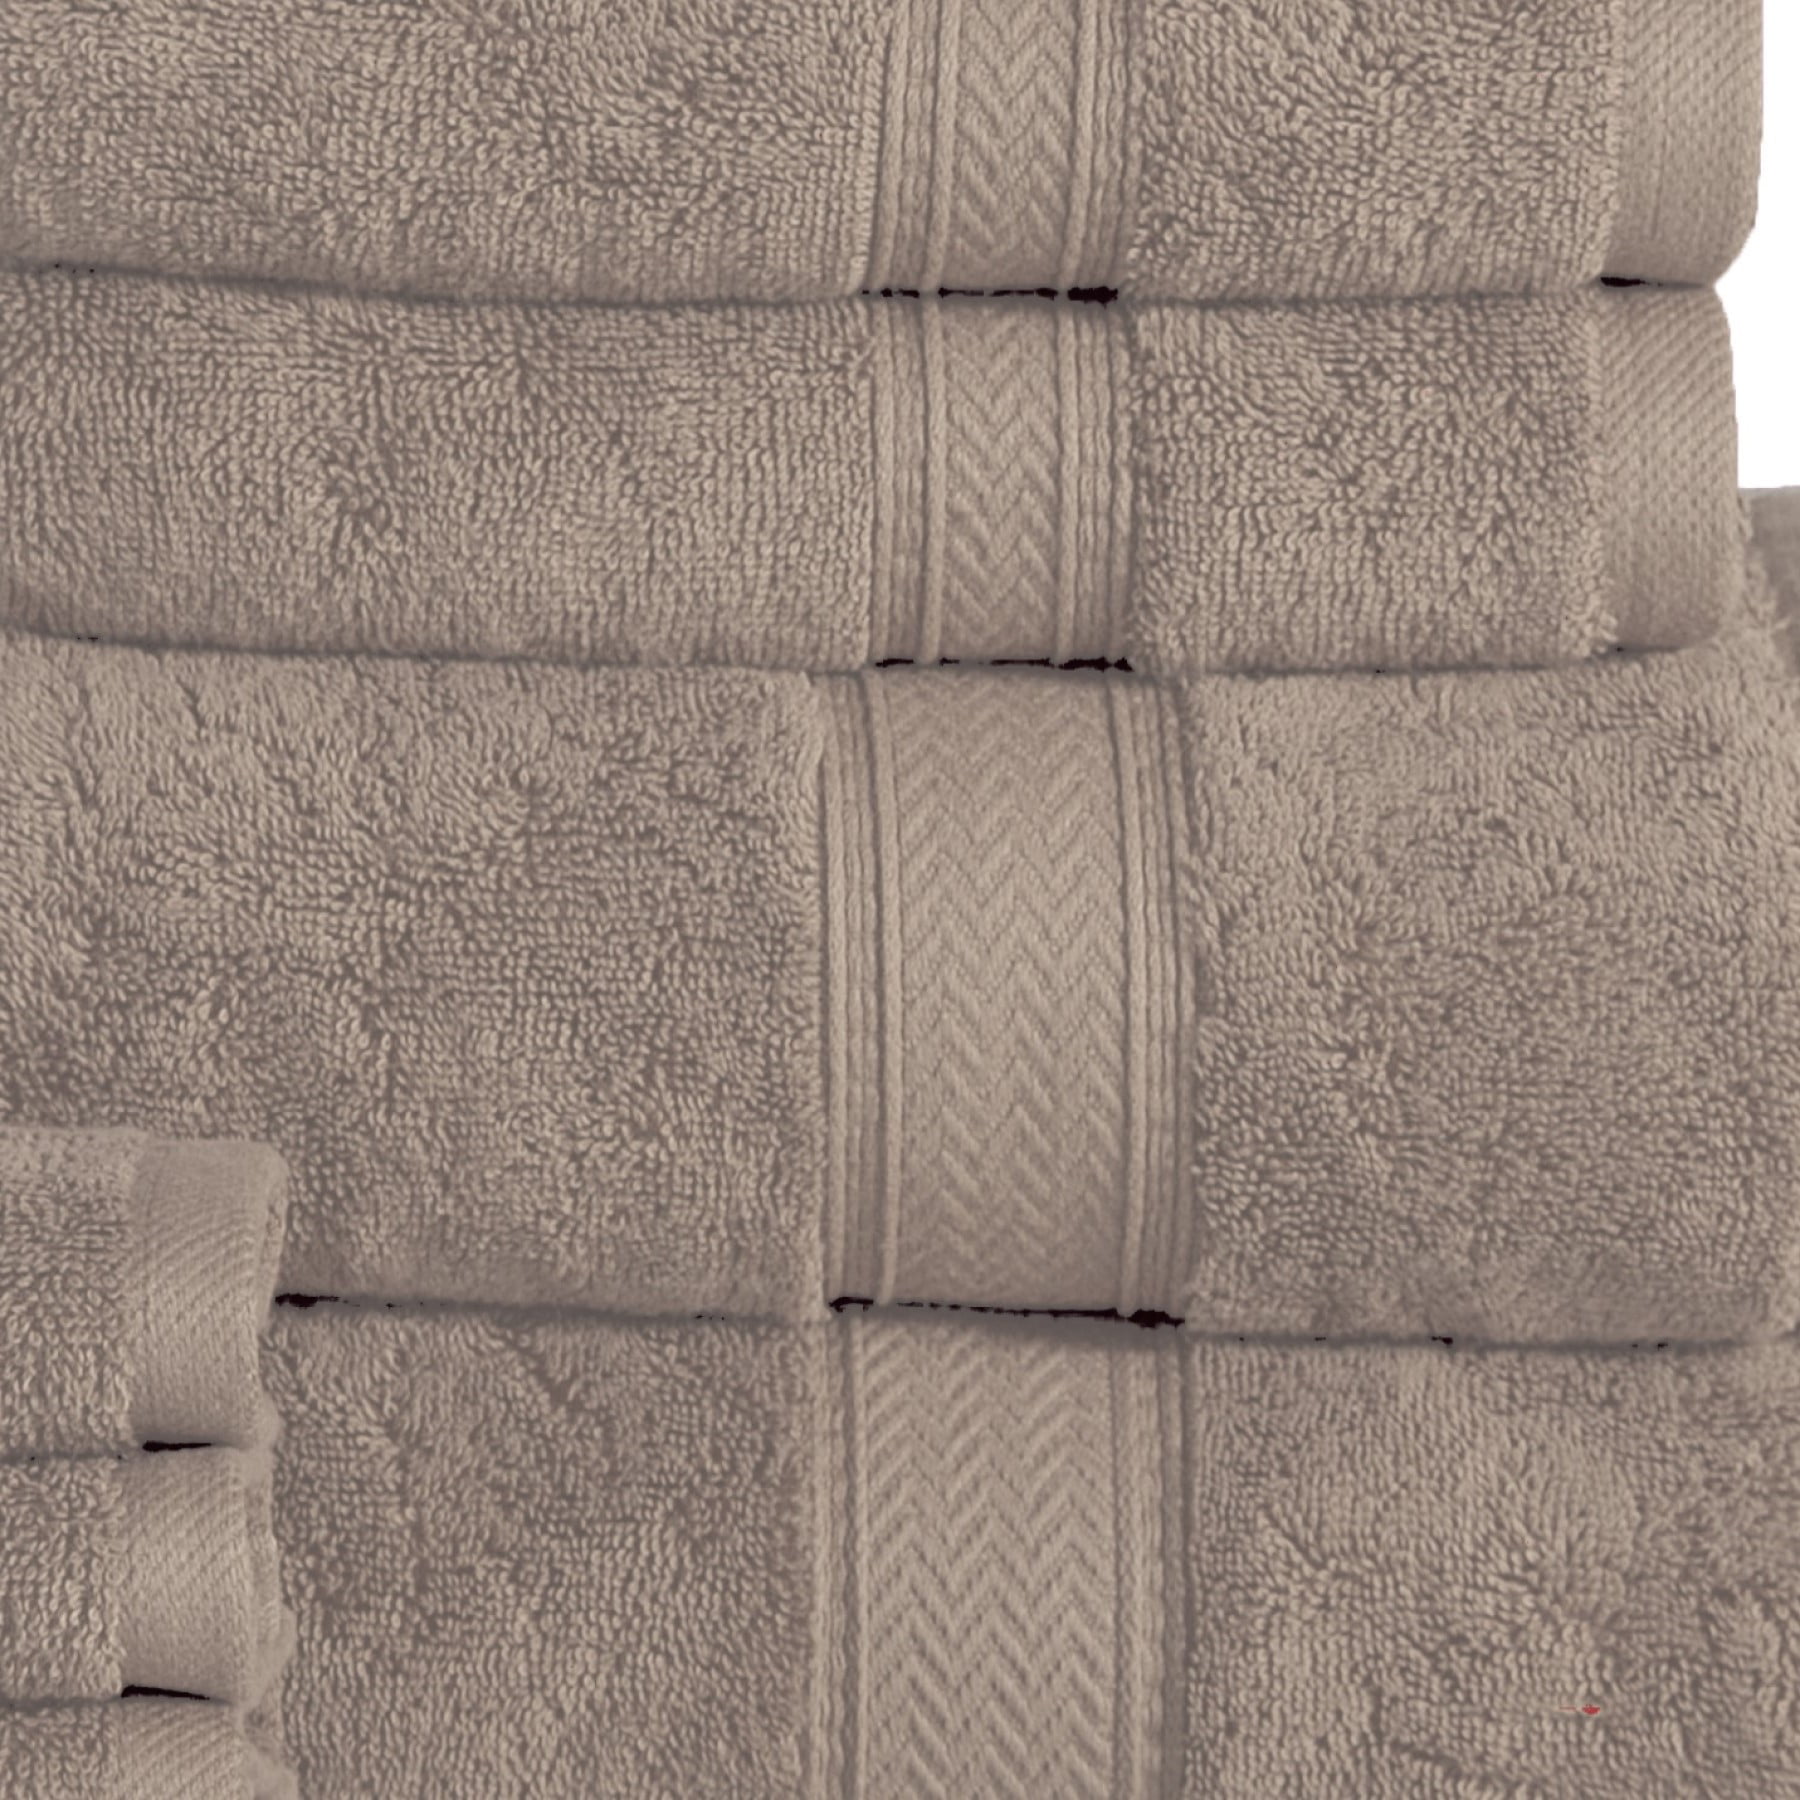 Addy Home Best Value 10-Piece Cotton Bath Towel Set (2 Bath, 4 Hand, 4  Wash), Rust 